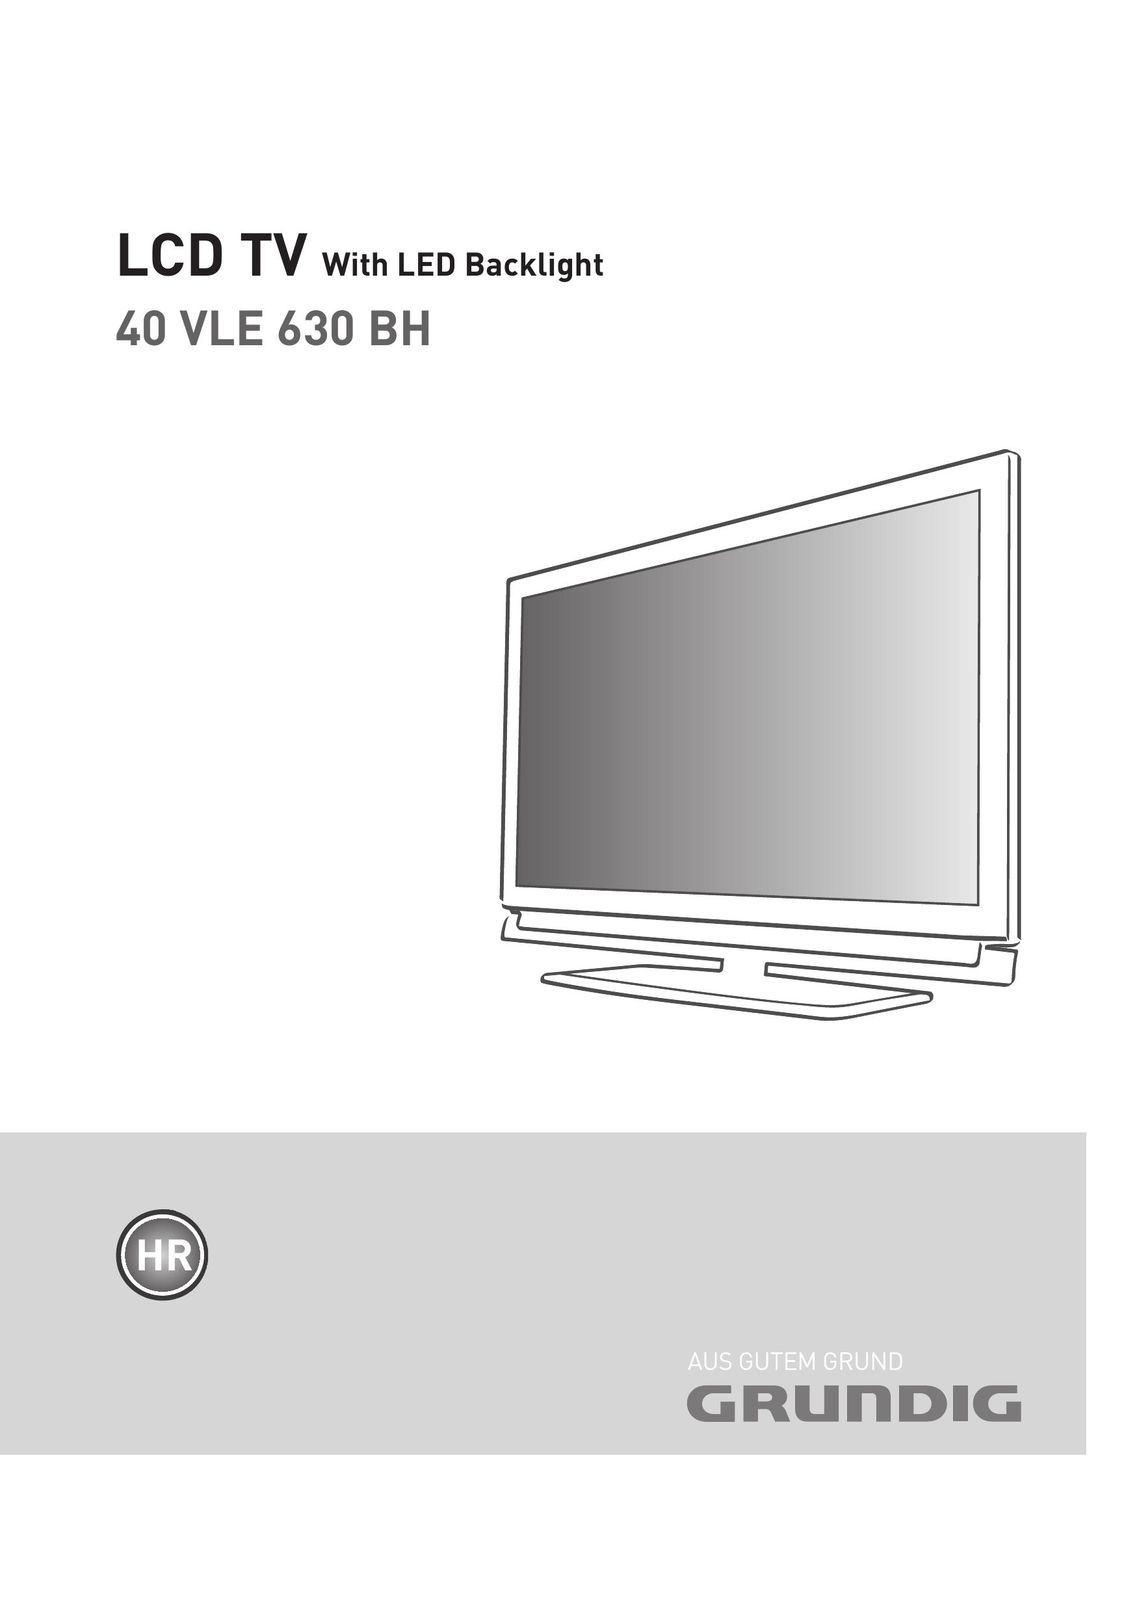 Grundig 40 vle 630 bh Flat Panel Television User Manual